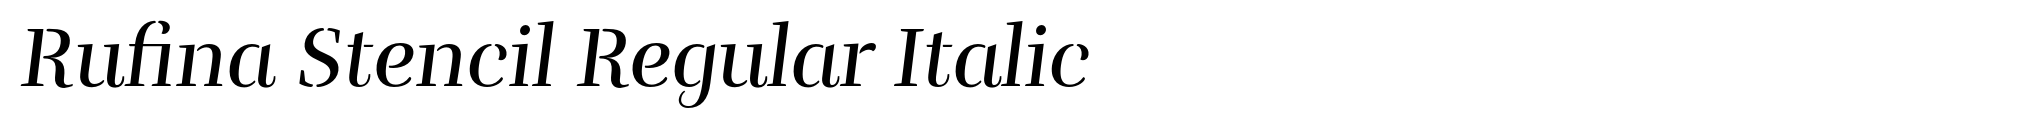 Rufina Stencil Regular Italic image